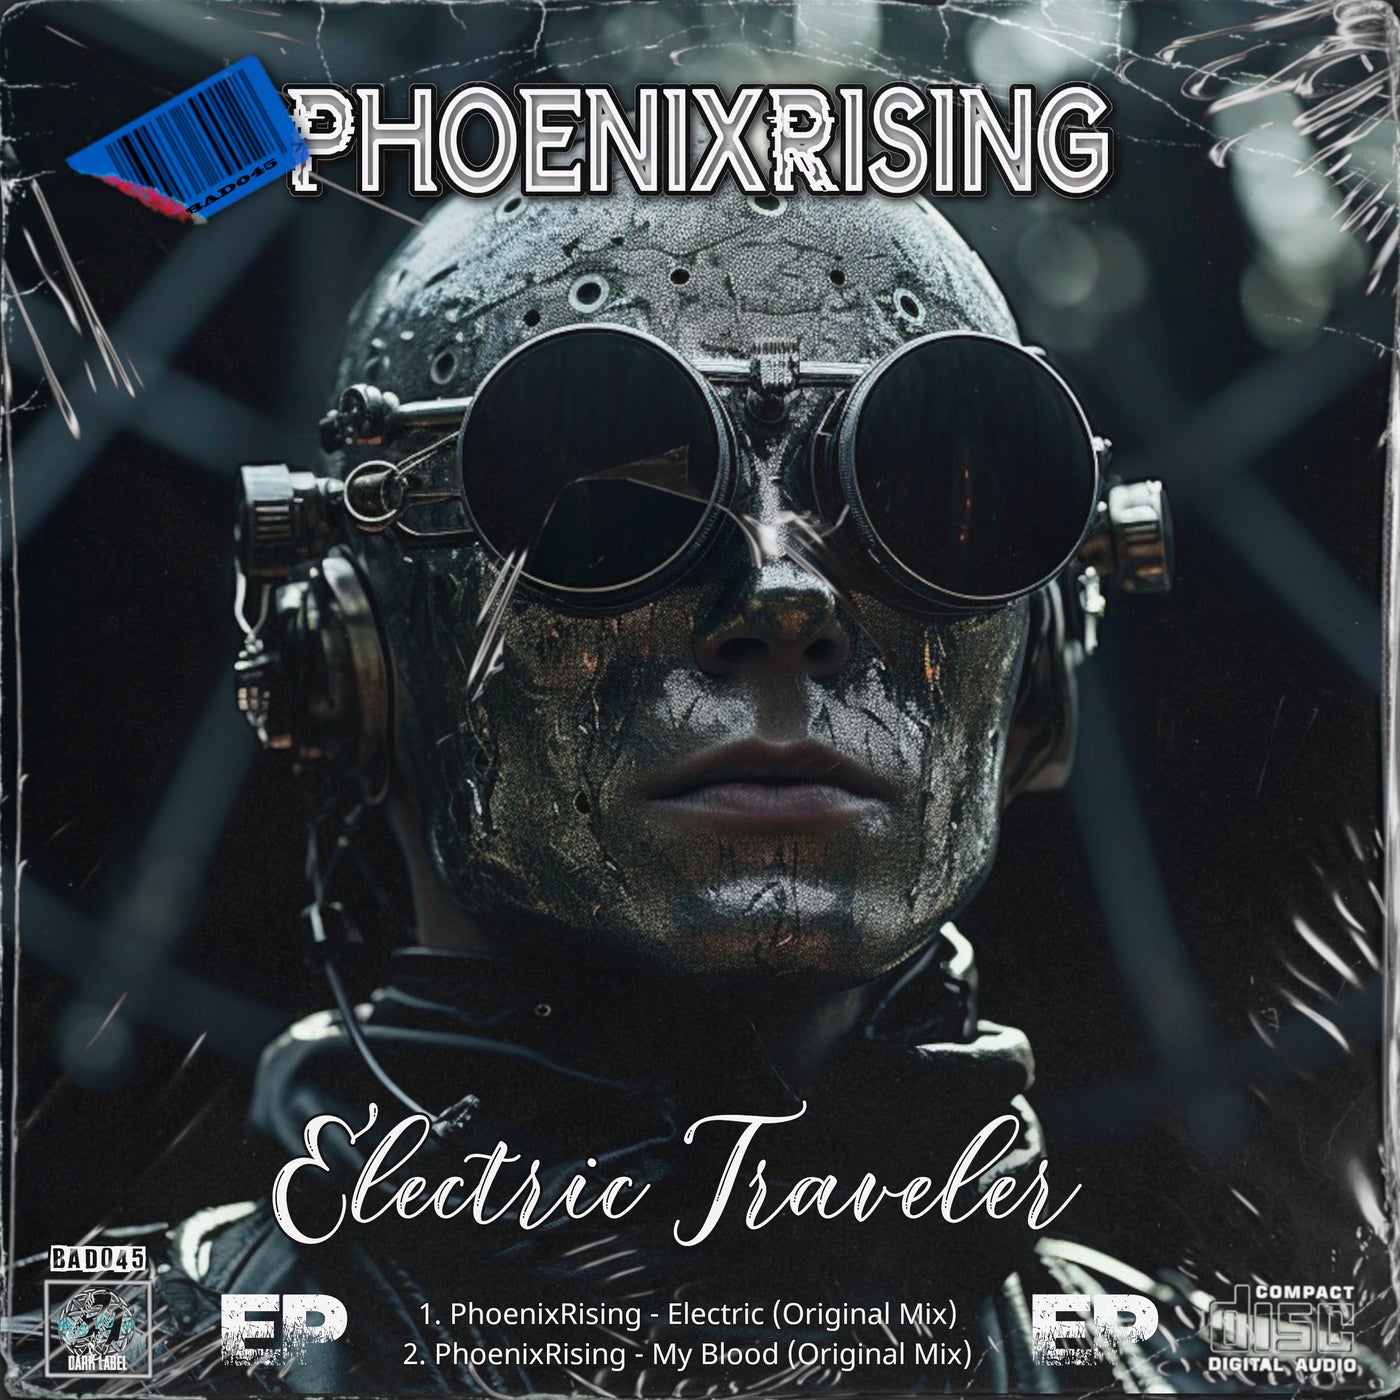 PhoenixRising - My Blood (Original Mix)